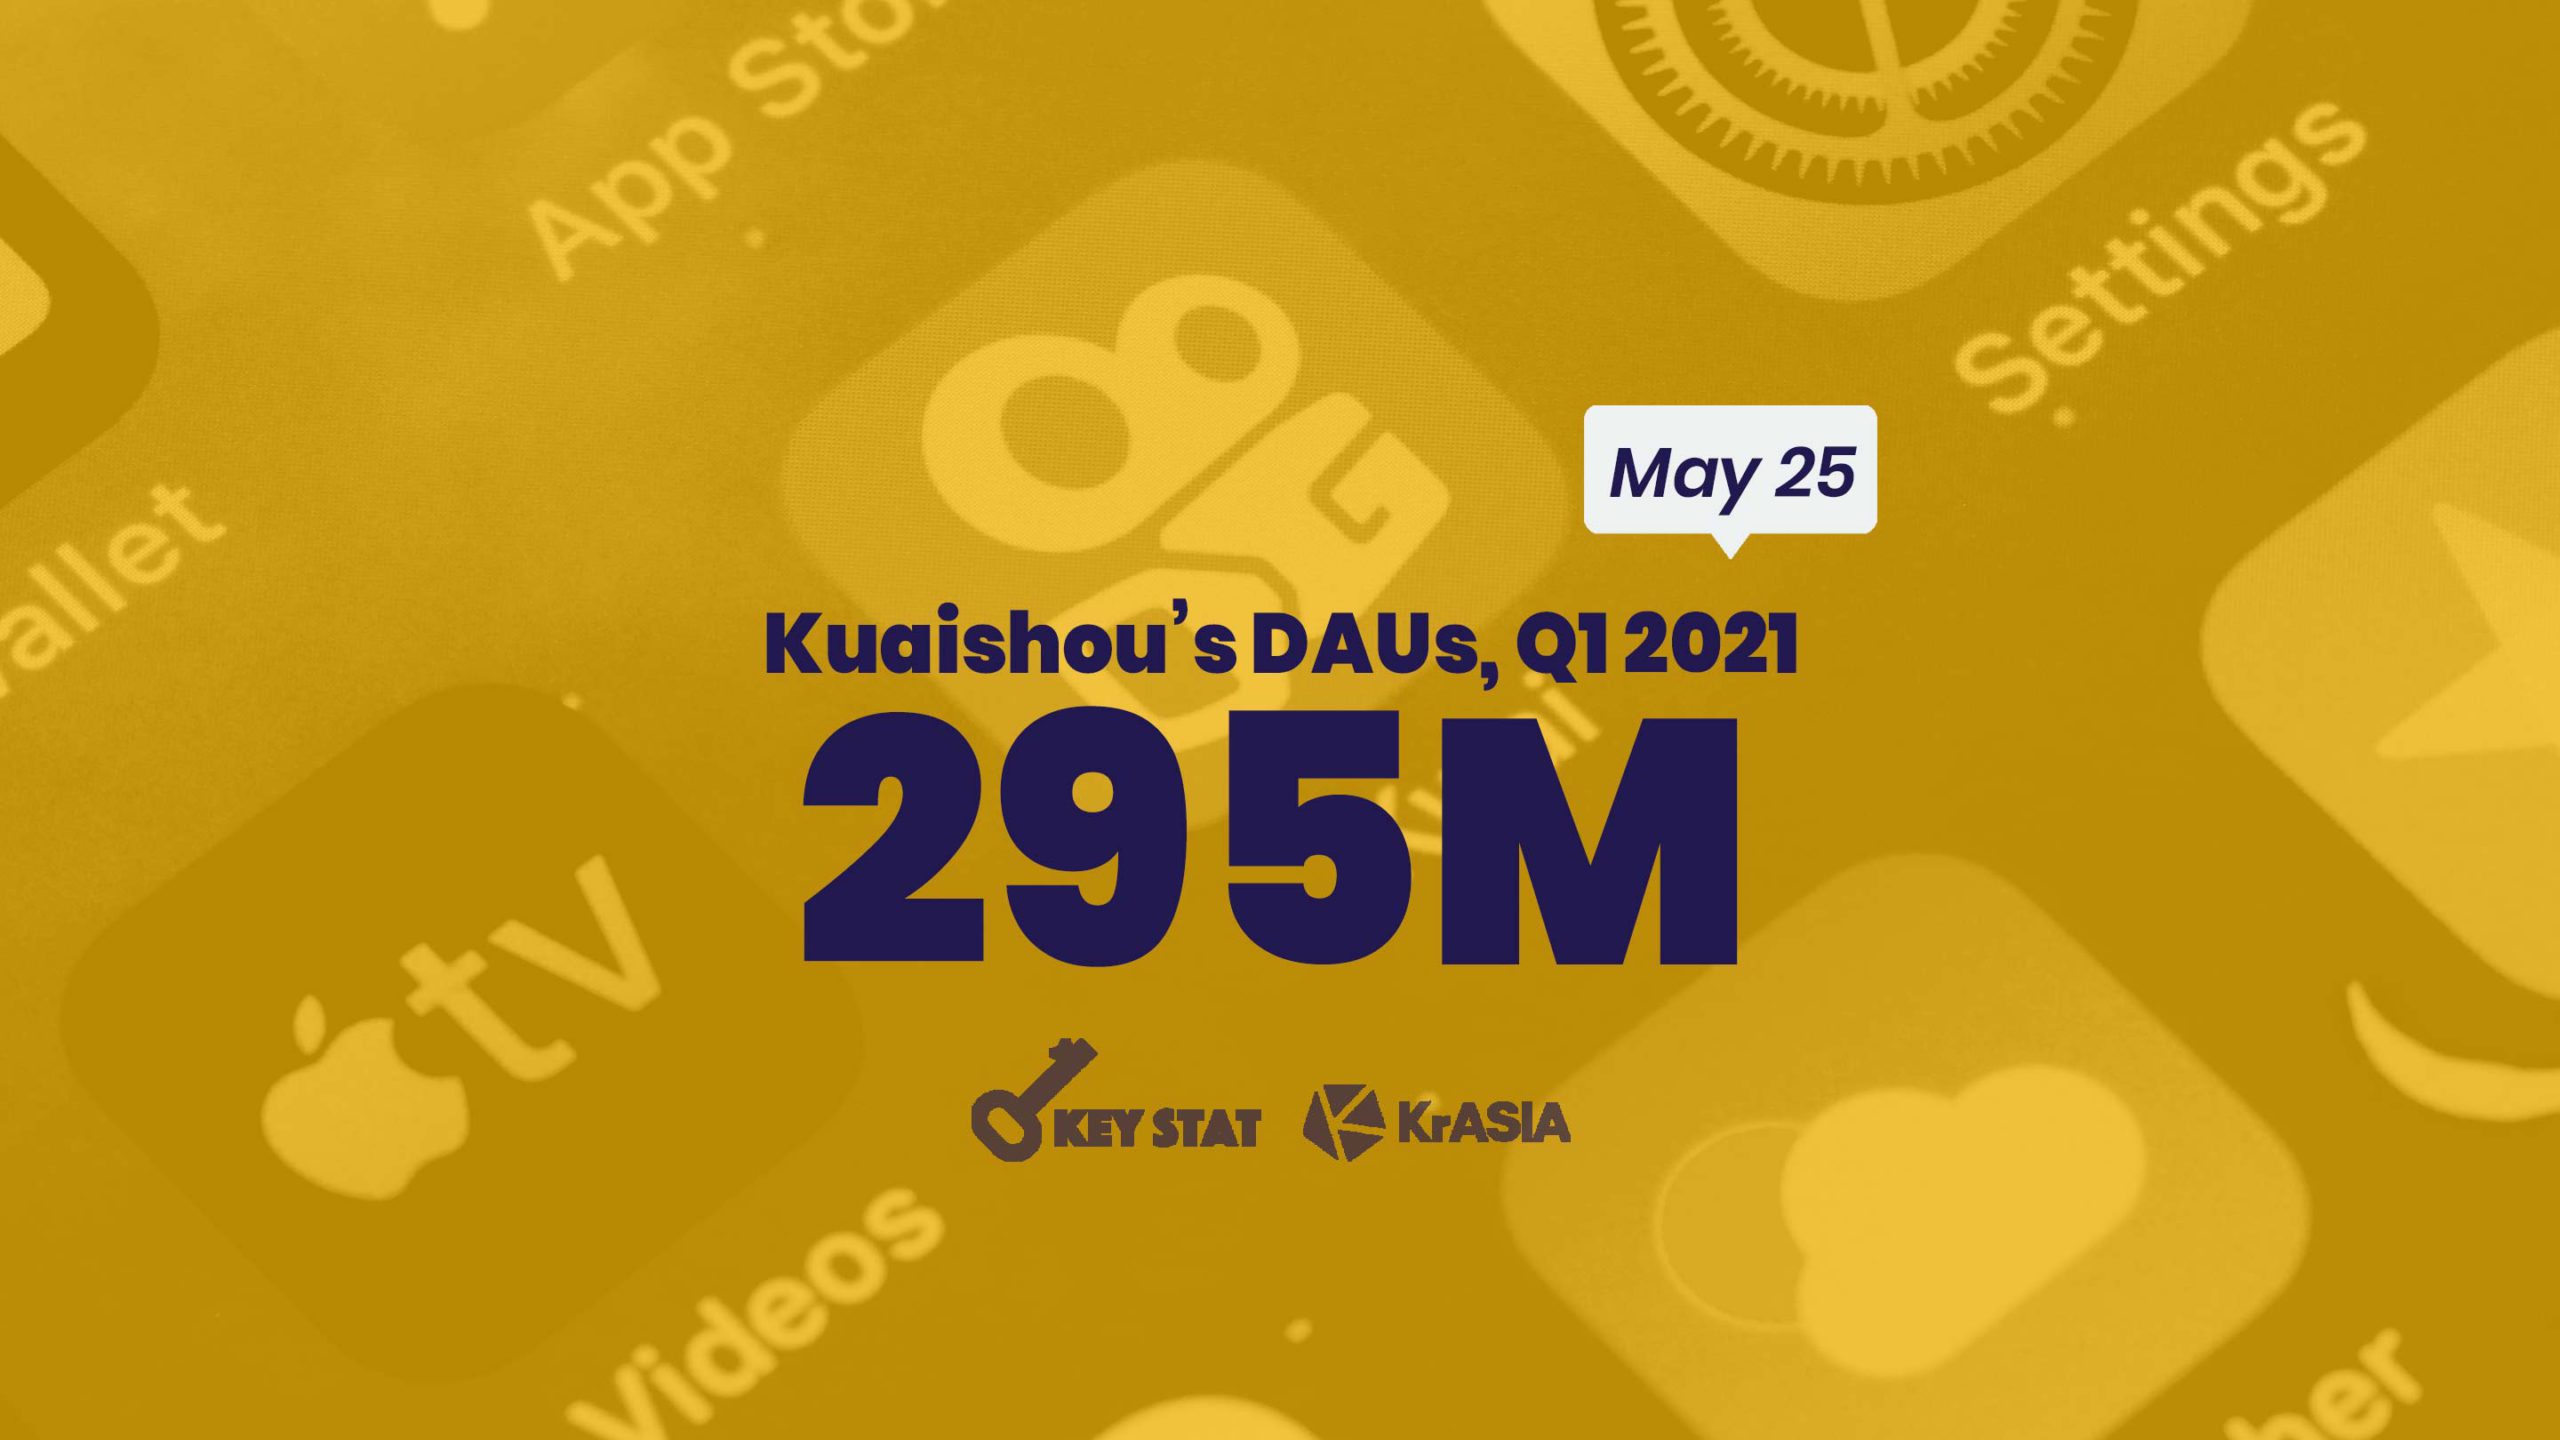 KEY STAT | Douyin rival Kuaishou sees increased profits, users in Q1